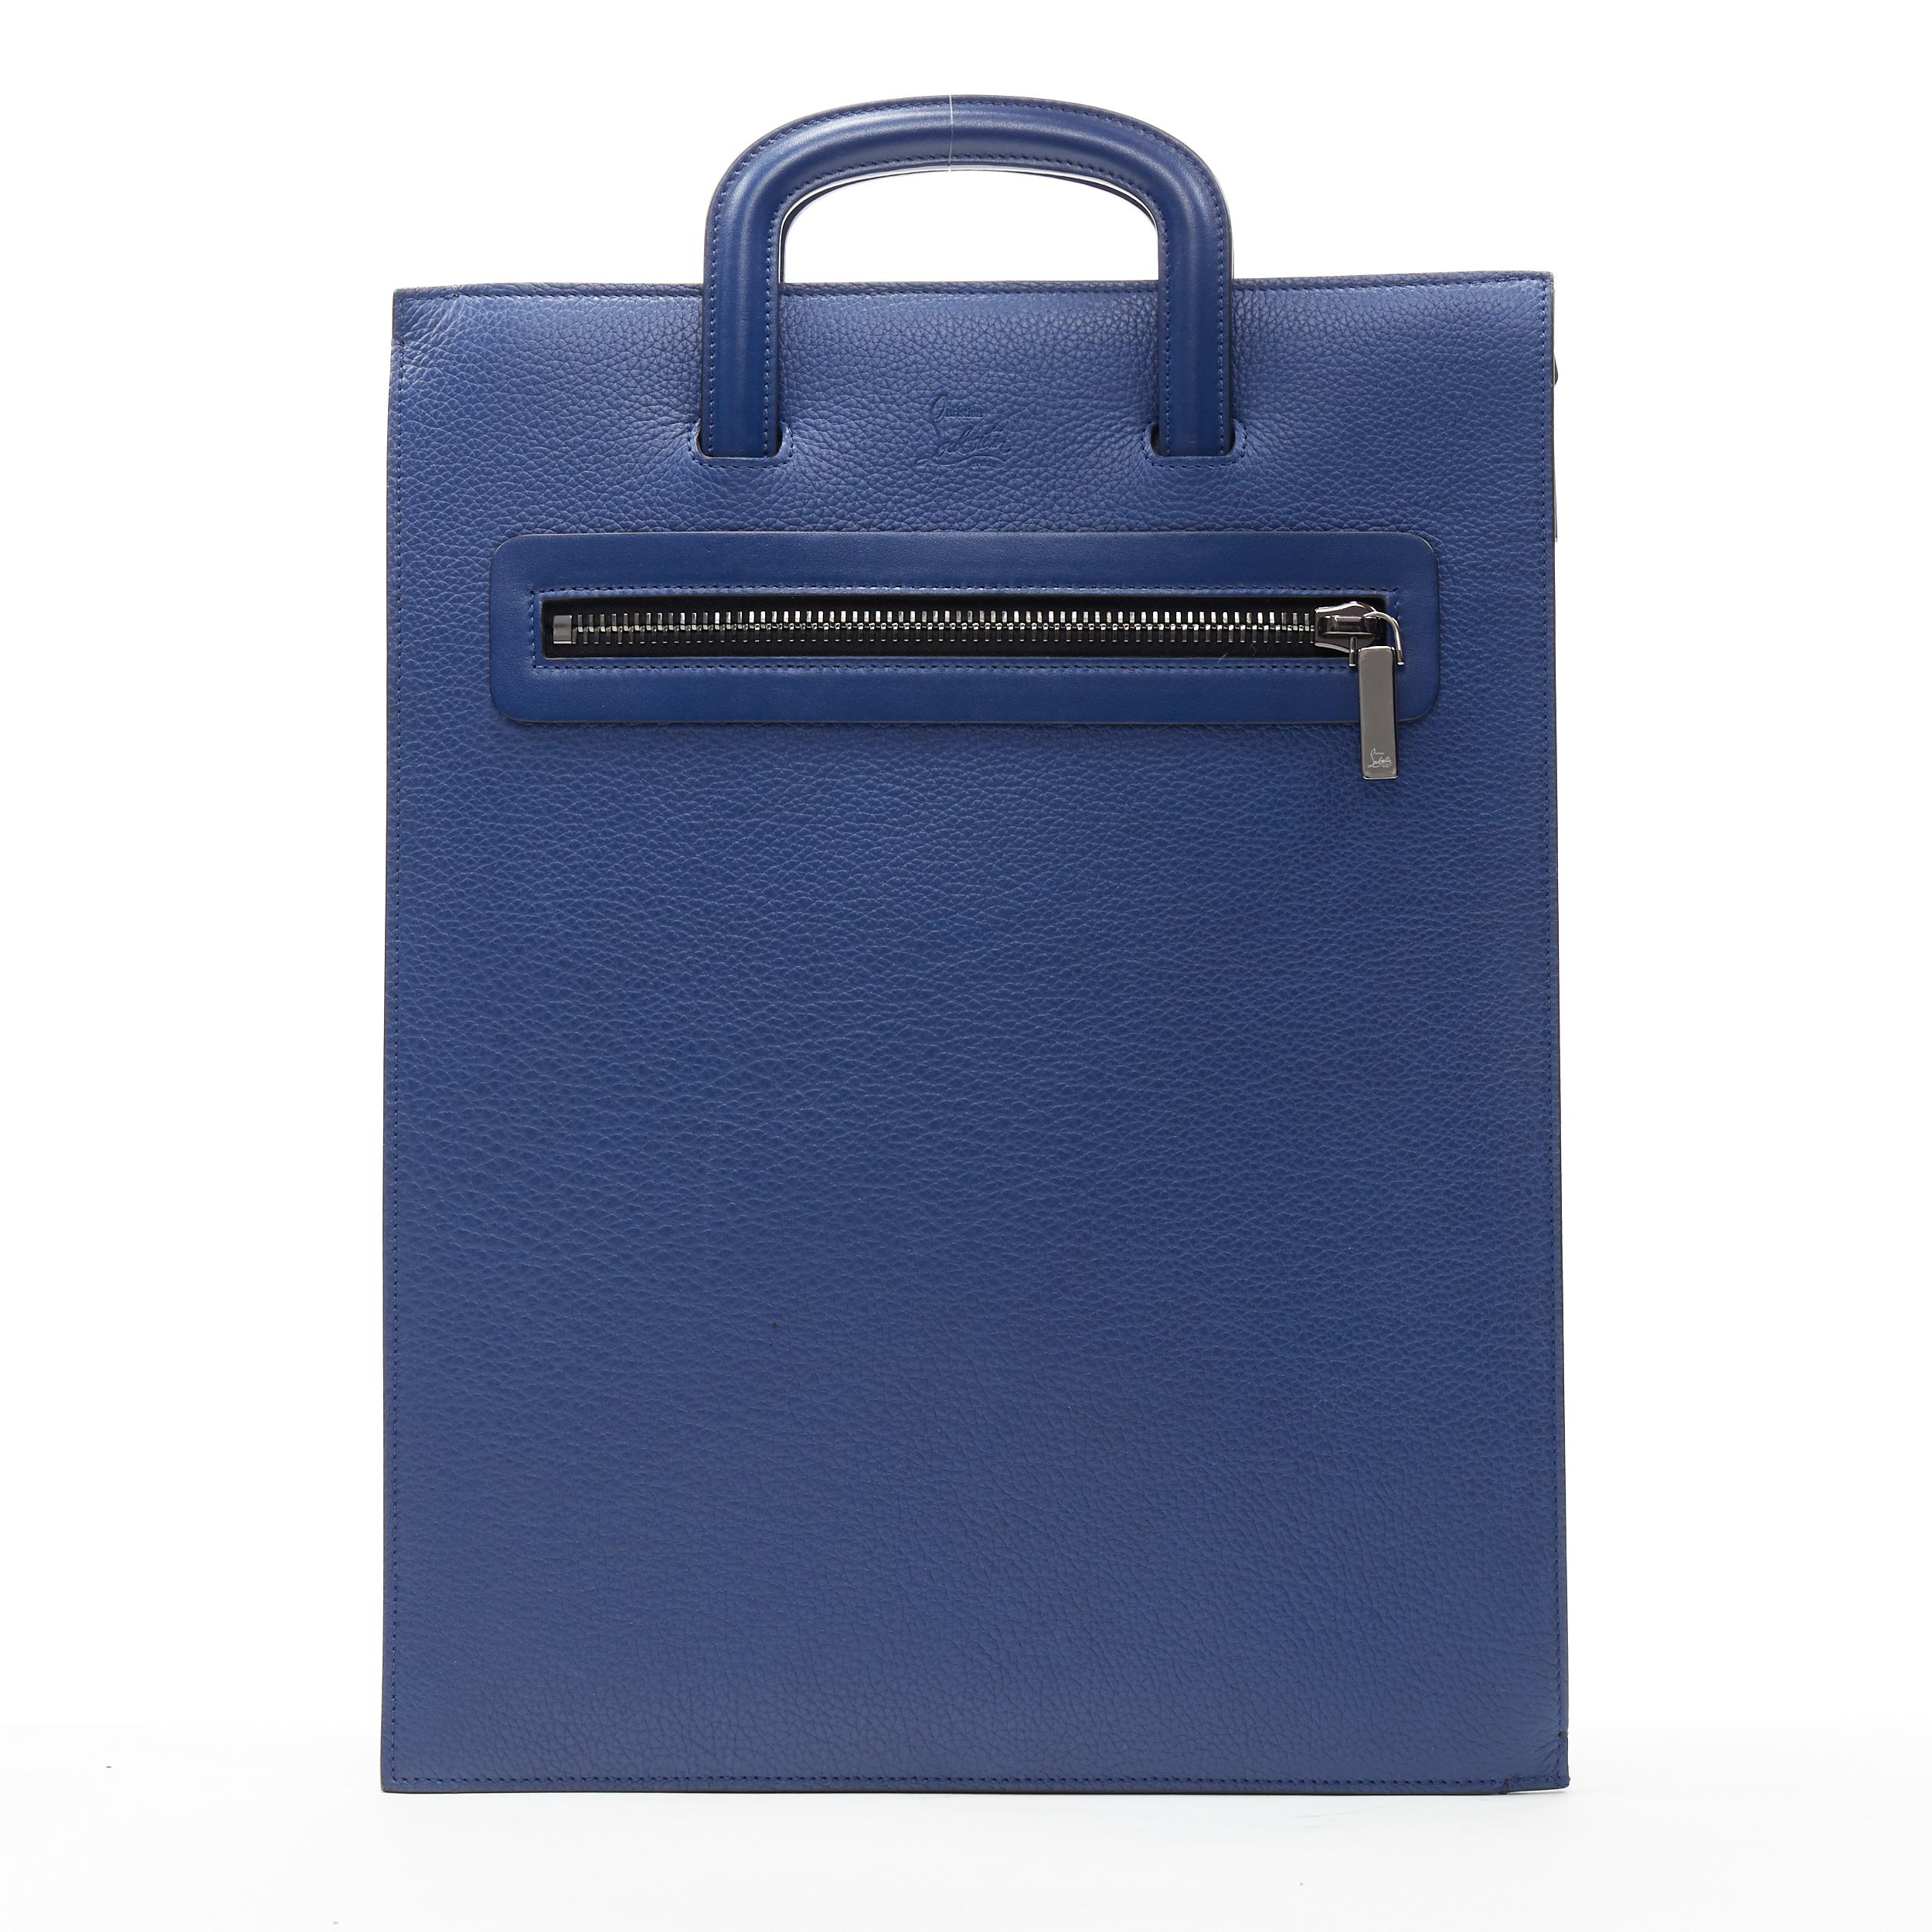 Blue CHRISTIAN LOUBOUTIN Trictrac blue crest studded leather side zip portfolio bag For Sale